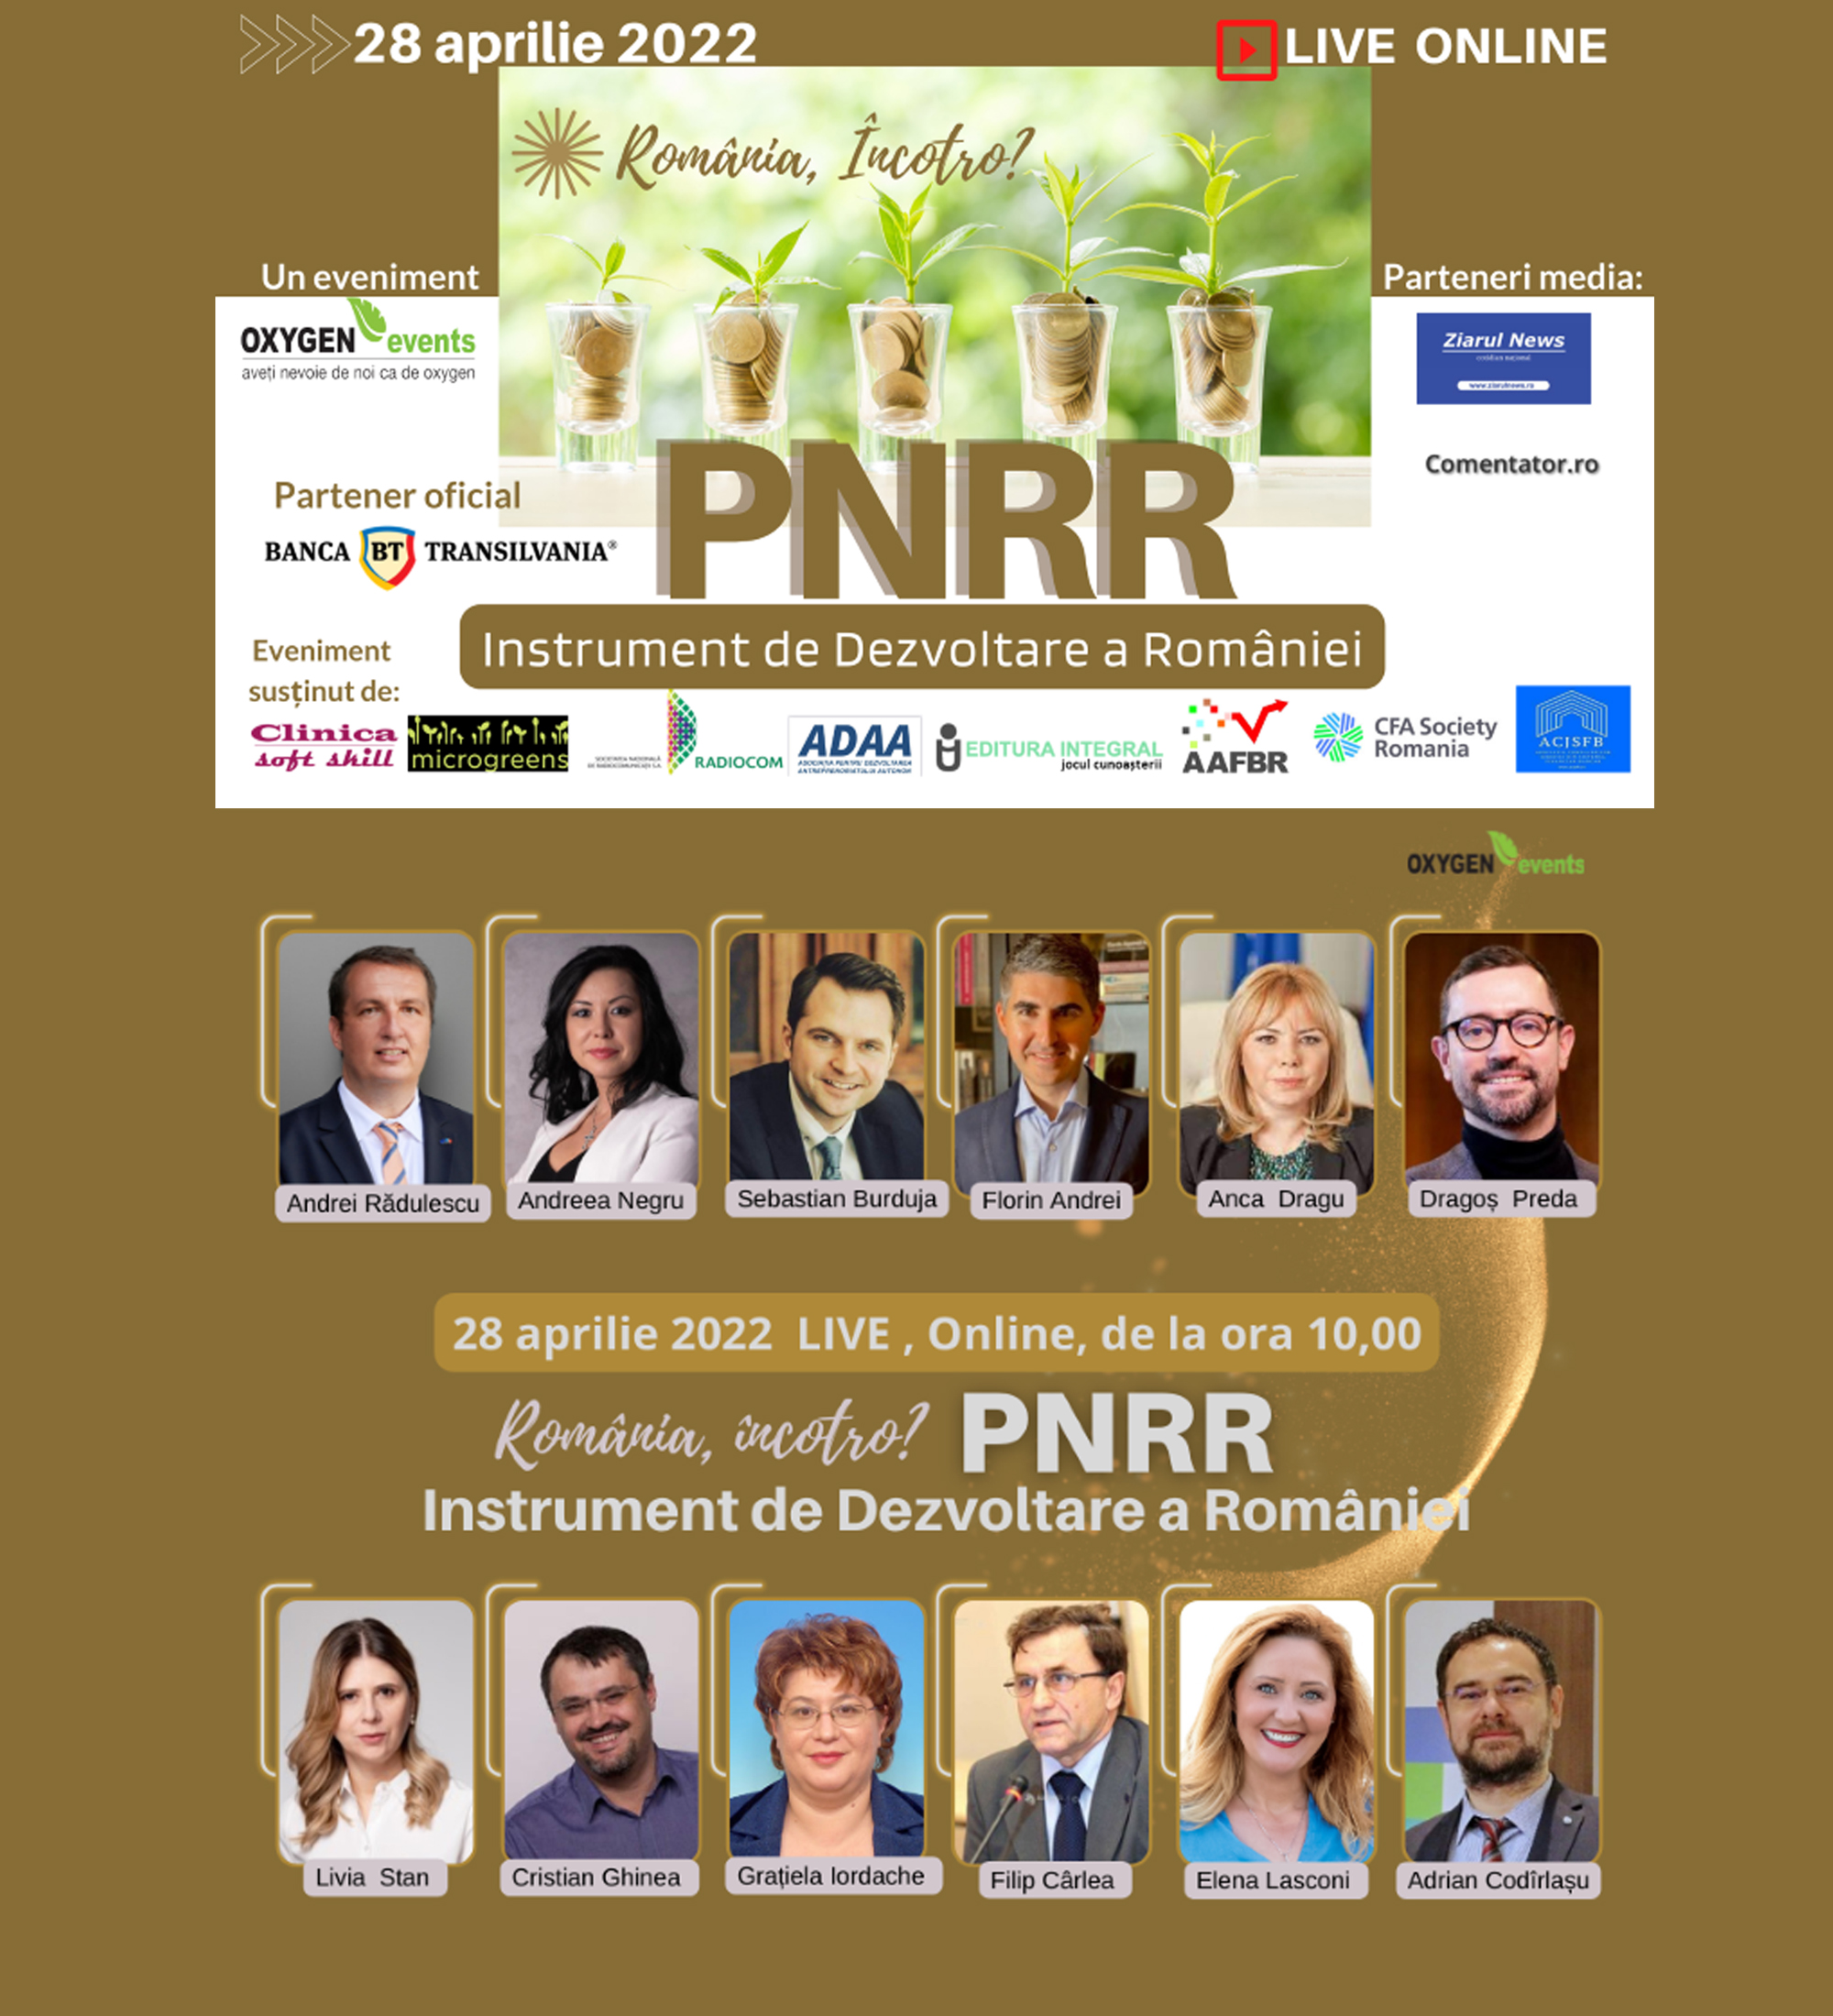 PNRR Instrument de Dezvoltare a României